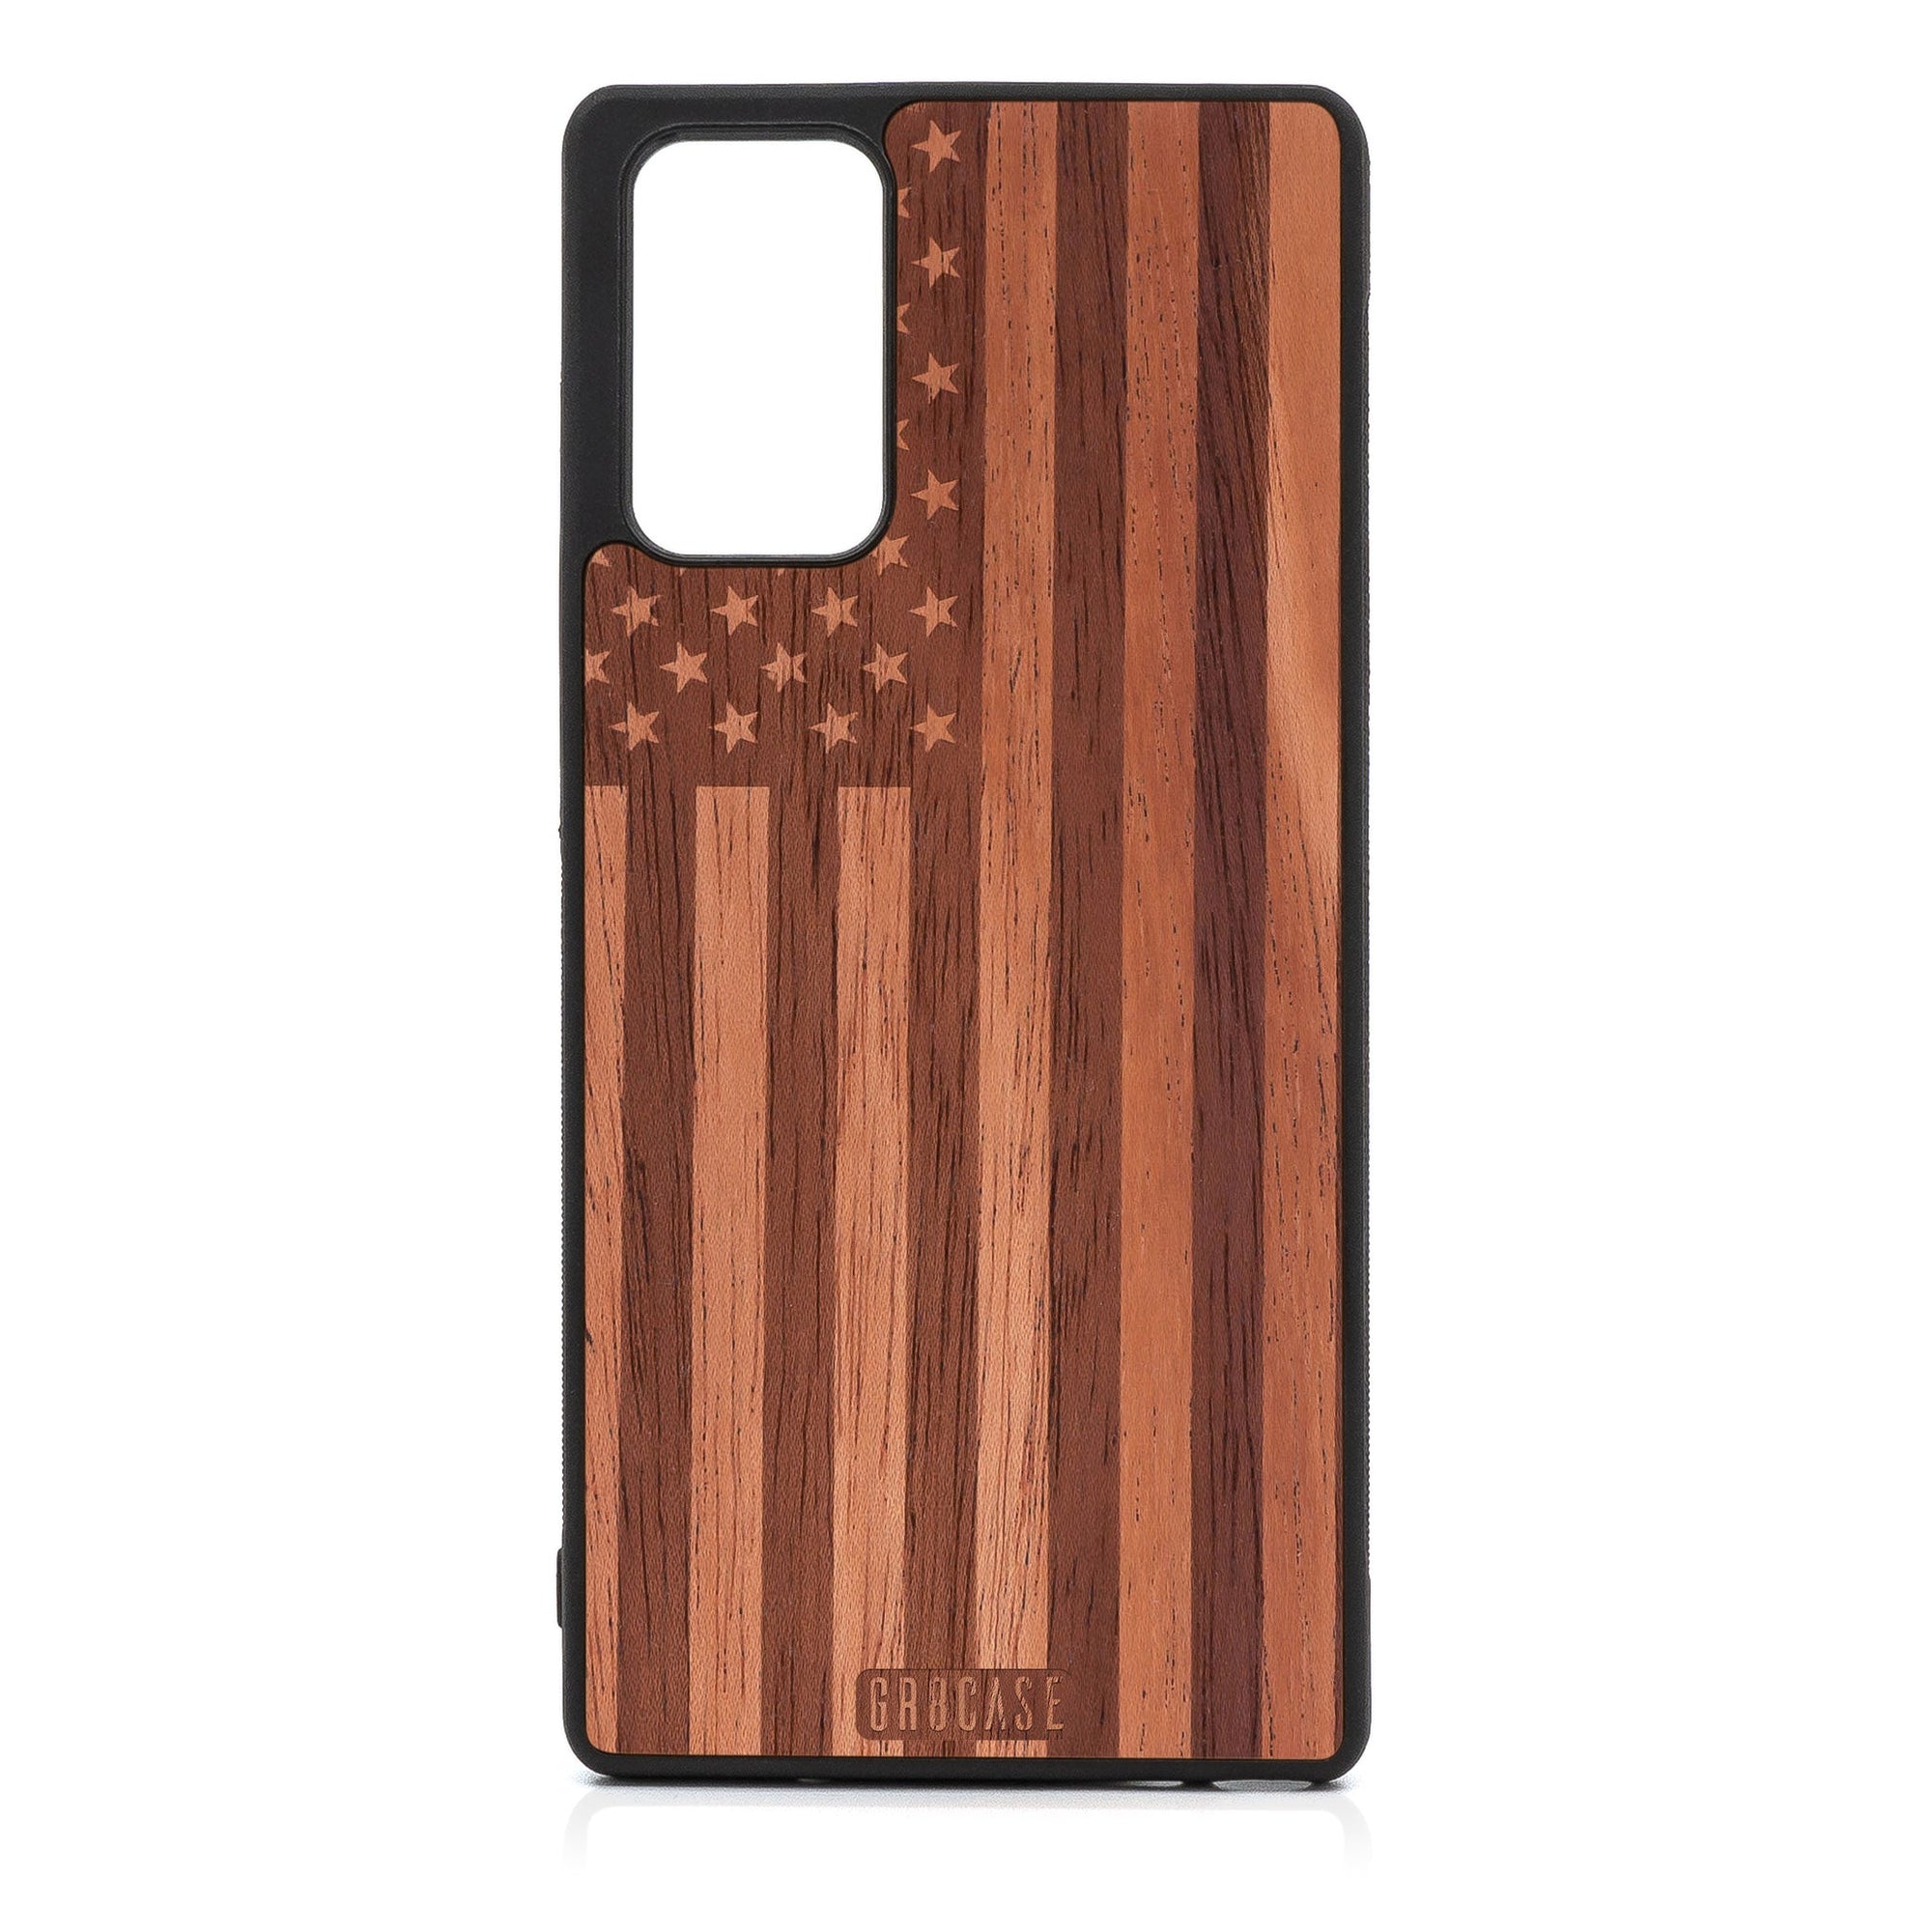 USA Flag Design Wood Case For Samsung Galaxy A52 5G